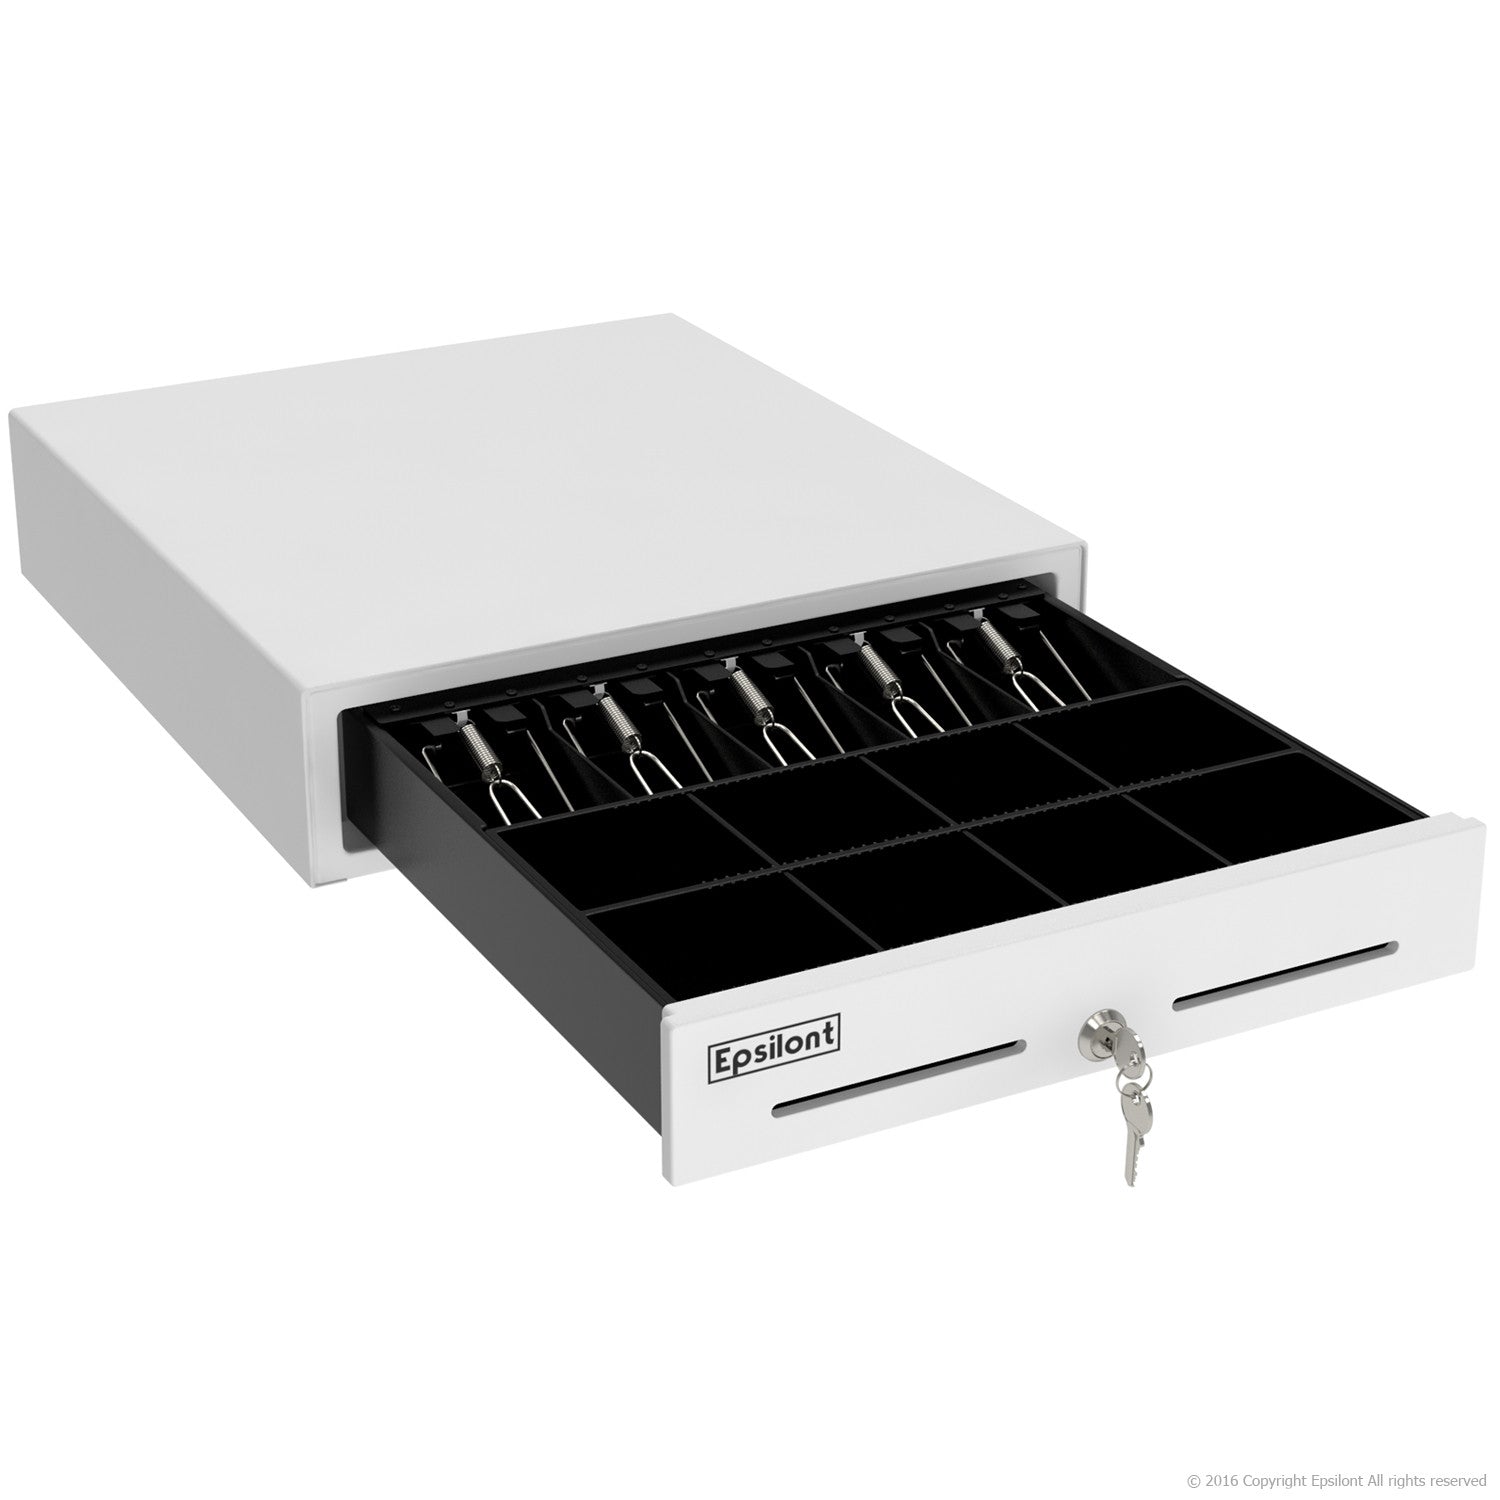 SQUARE POS REGISTER SYSTEM Star USB Receipt Printer and Cash Drawer